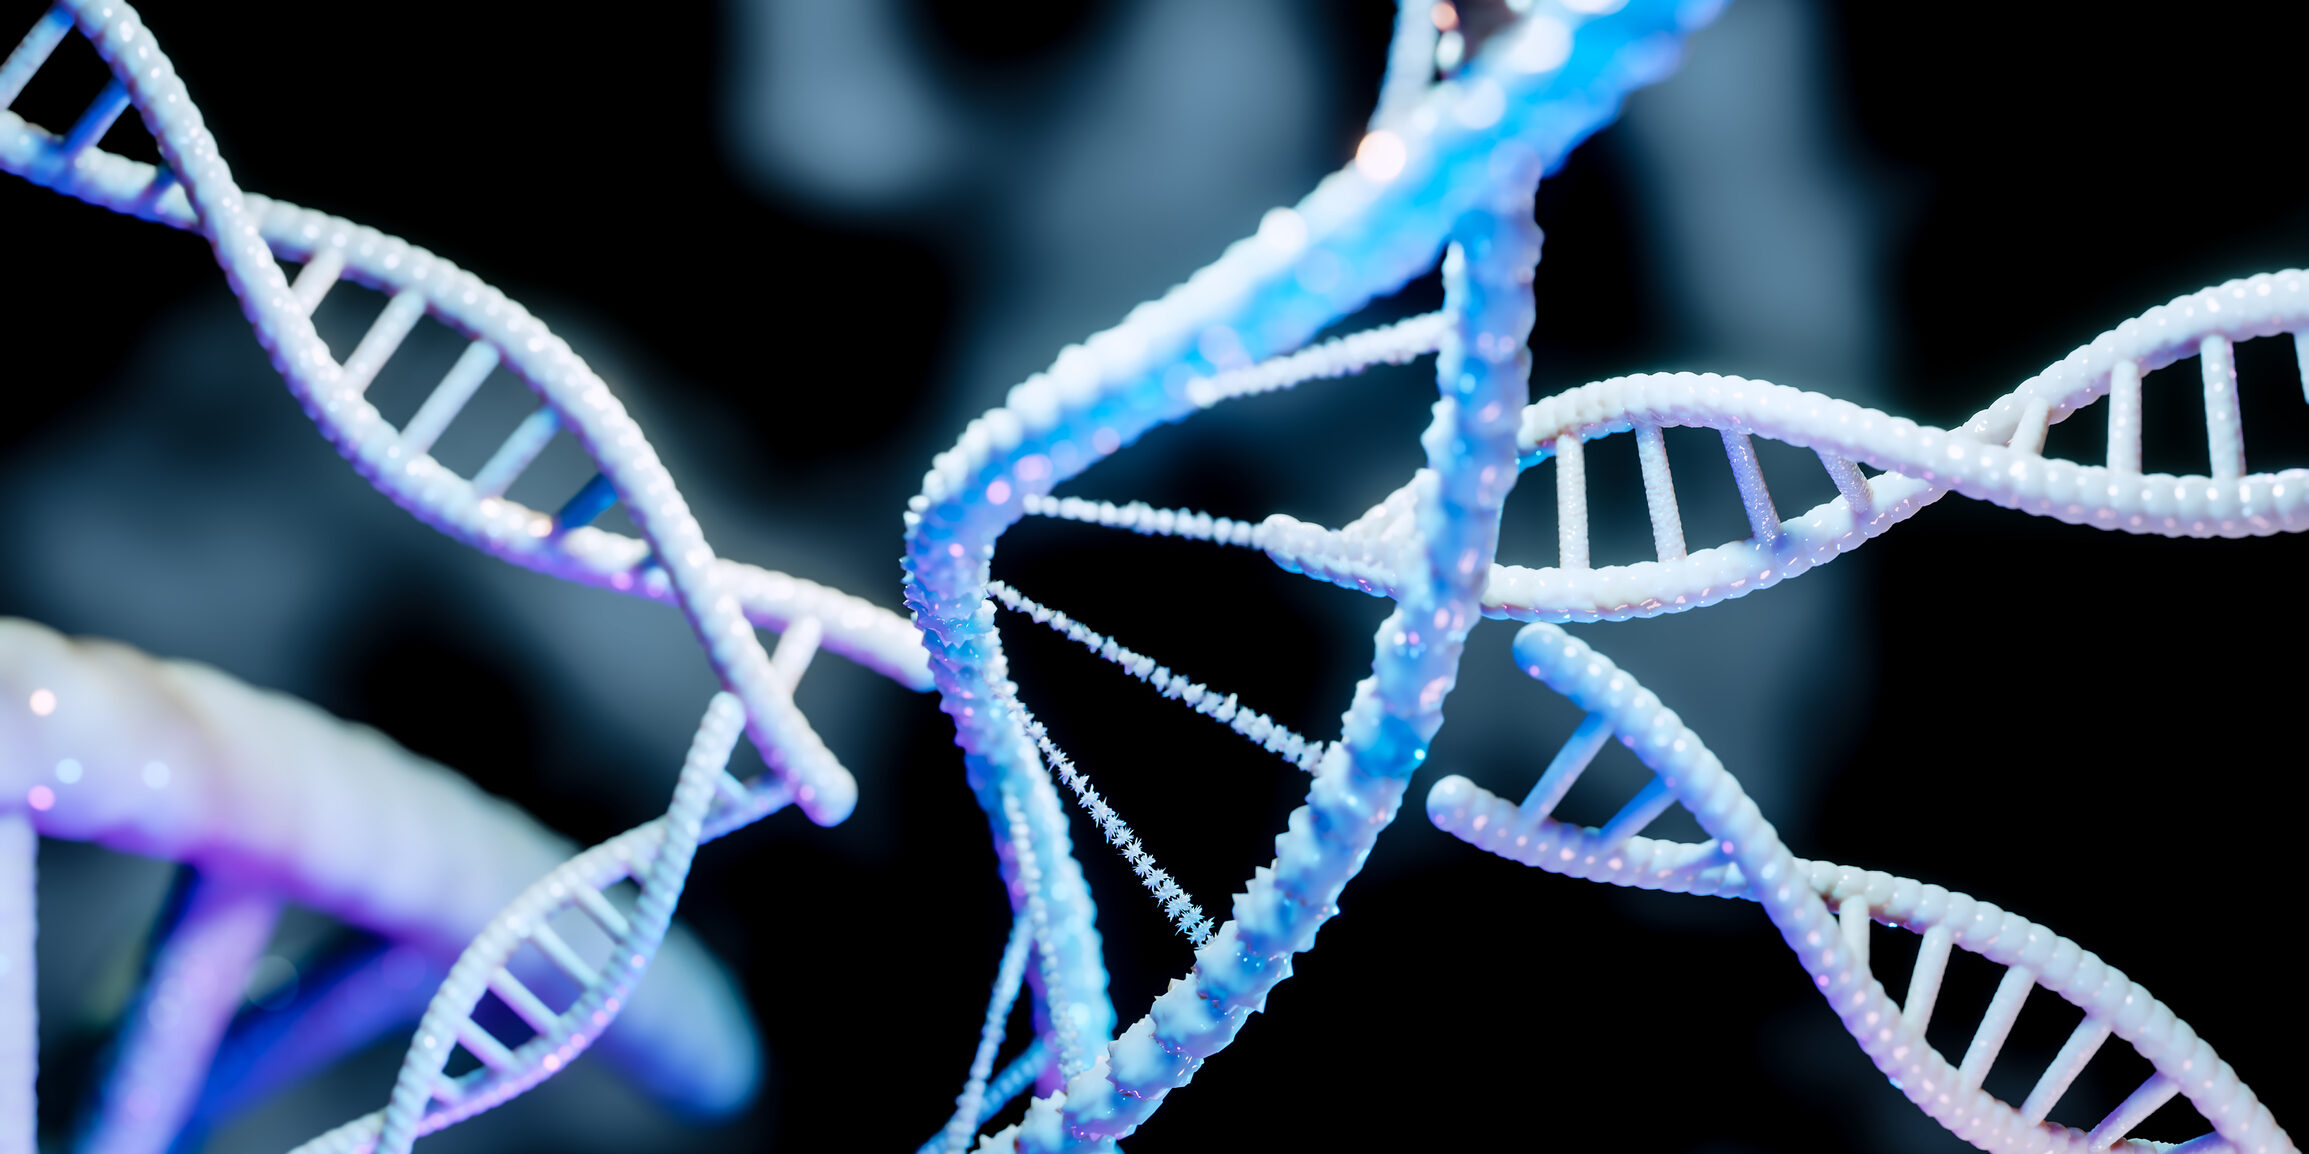 Blue double helix DNA strands against black background